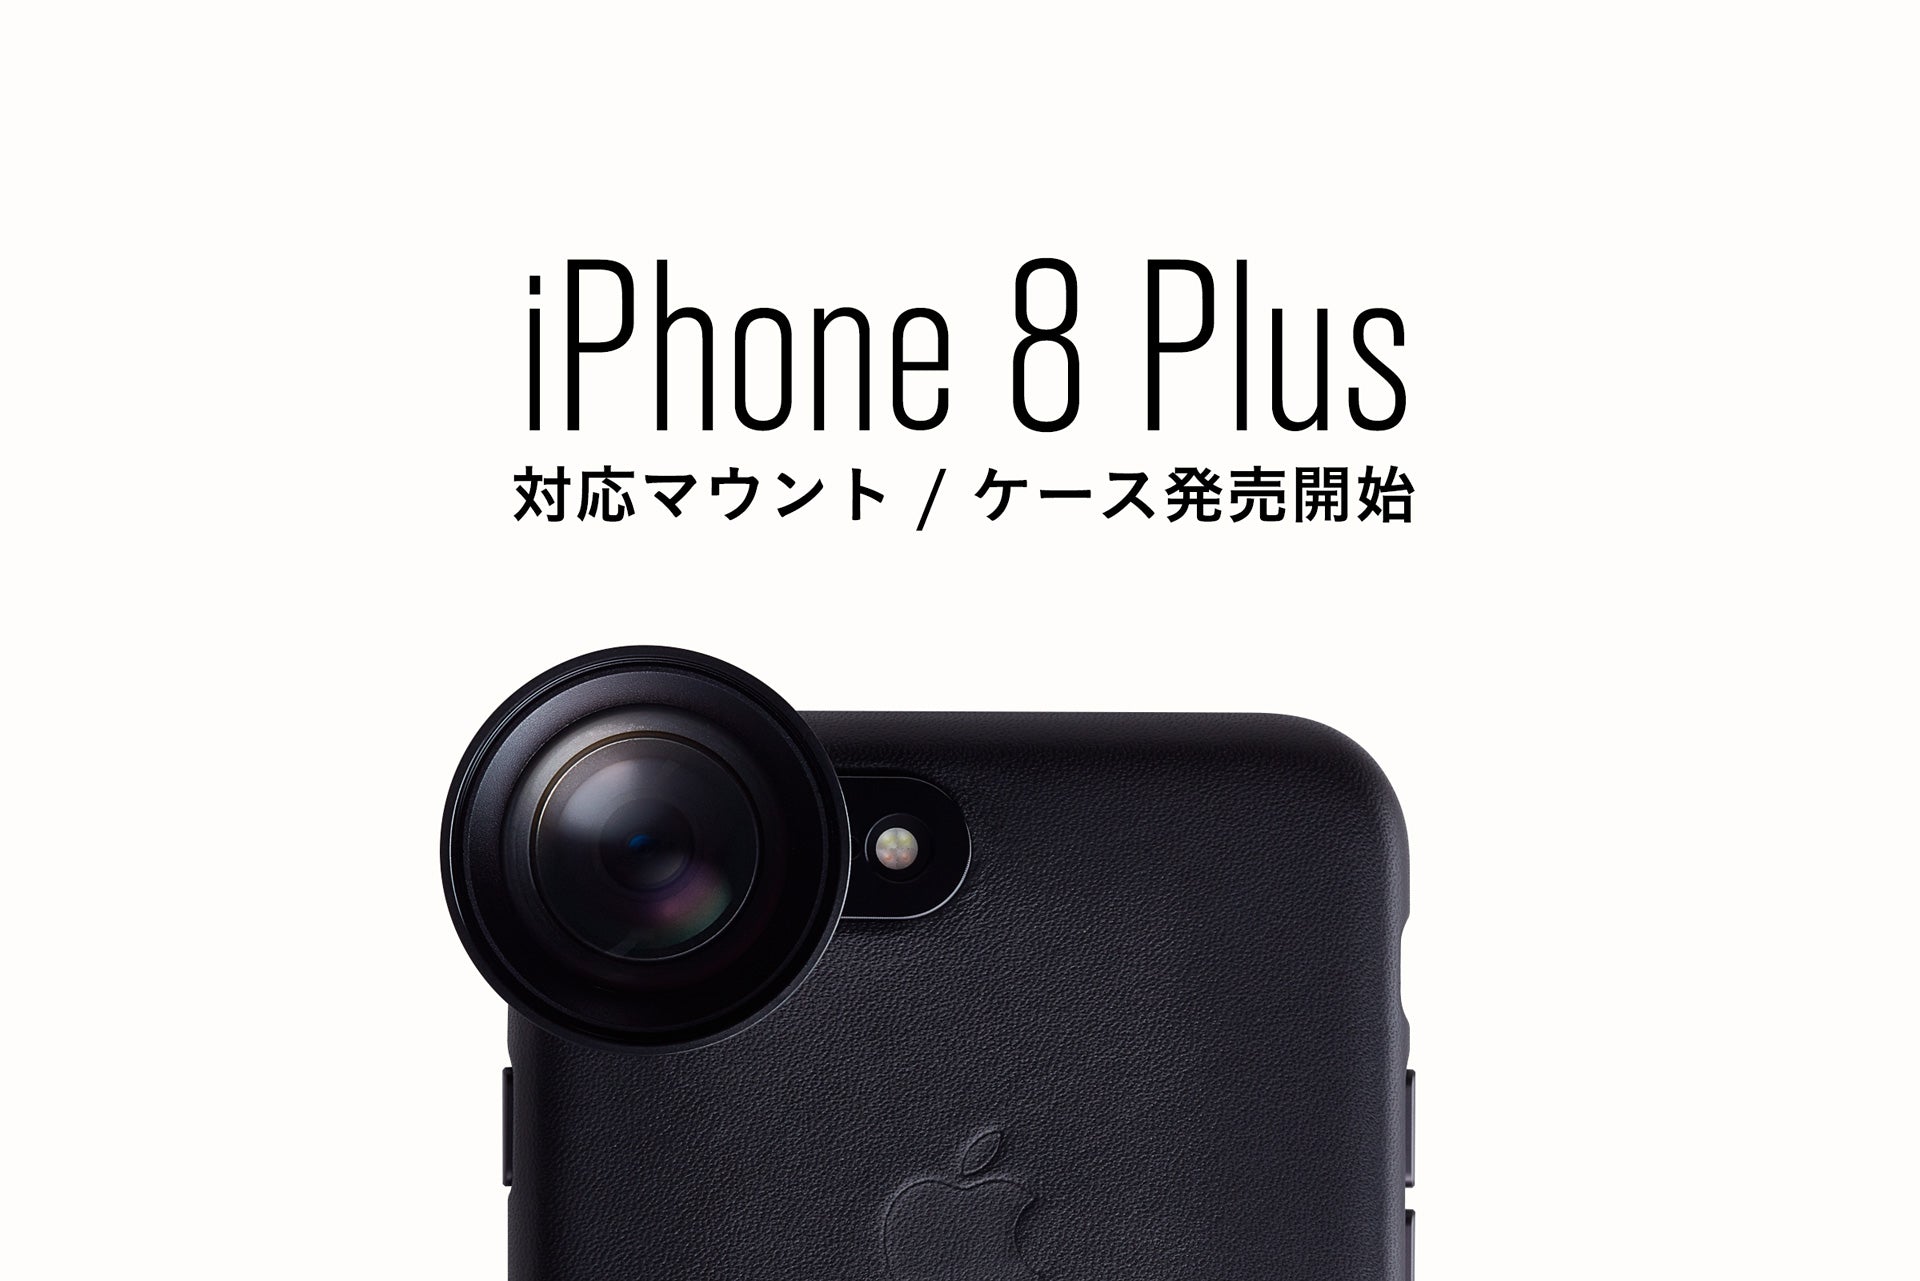 iPhone 8 Plus 対応 マウント/ケース発売開始